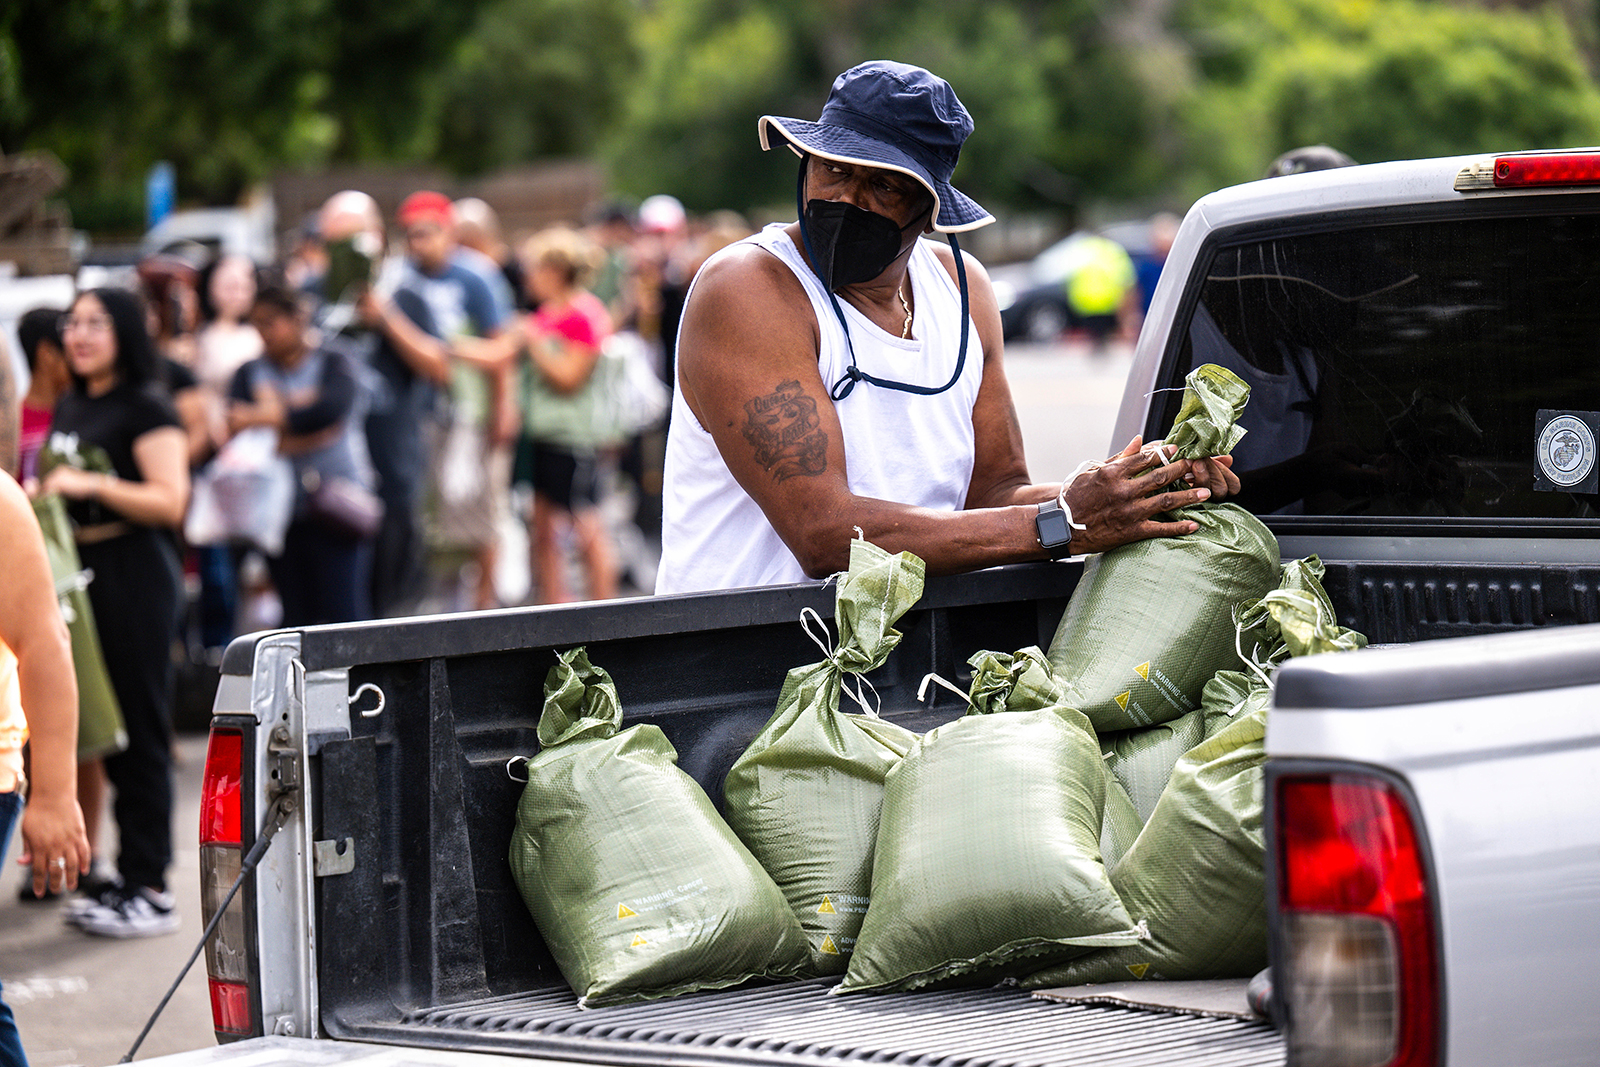 A man loads sandbags onto a truck in preparation for the arrival of Hurricane Hilary in San Bernardino, California on August 19.